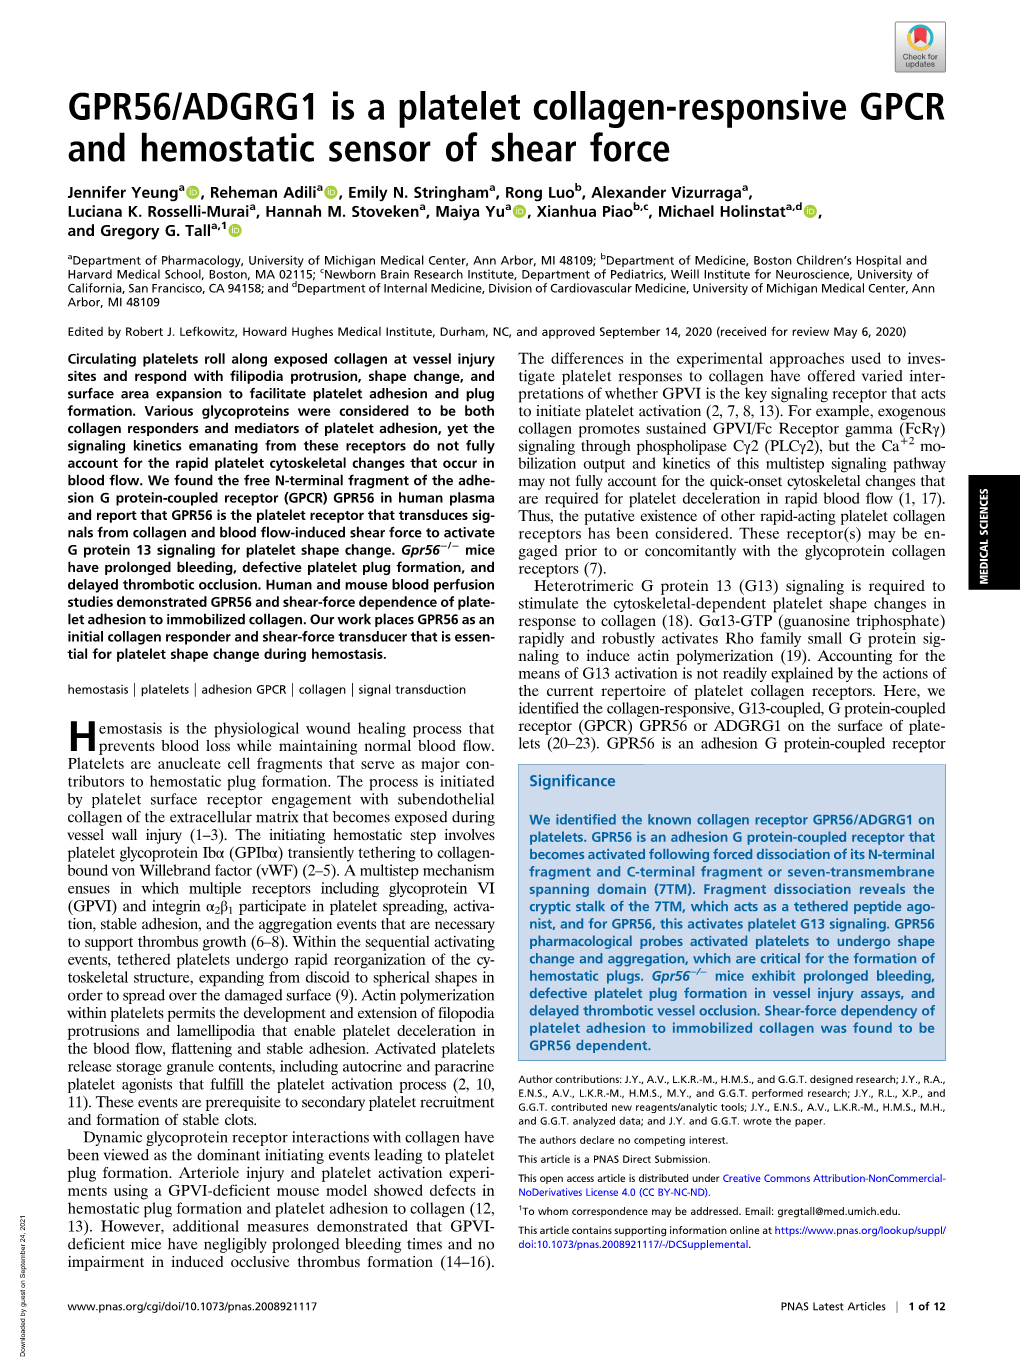 GPR56/ADGRG1 Is a Platelet Collagen-Responsive GPCR and Hemostatic Sensor of Shear Force